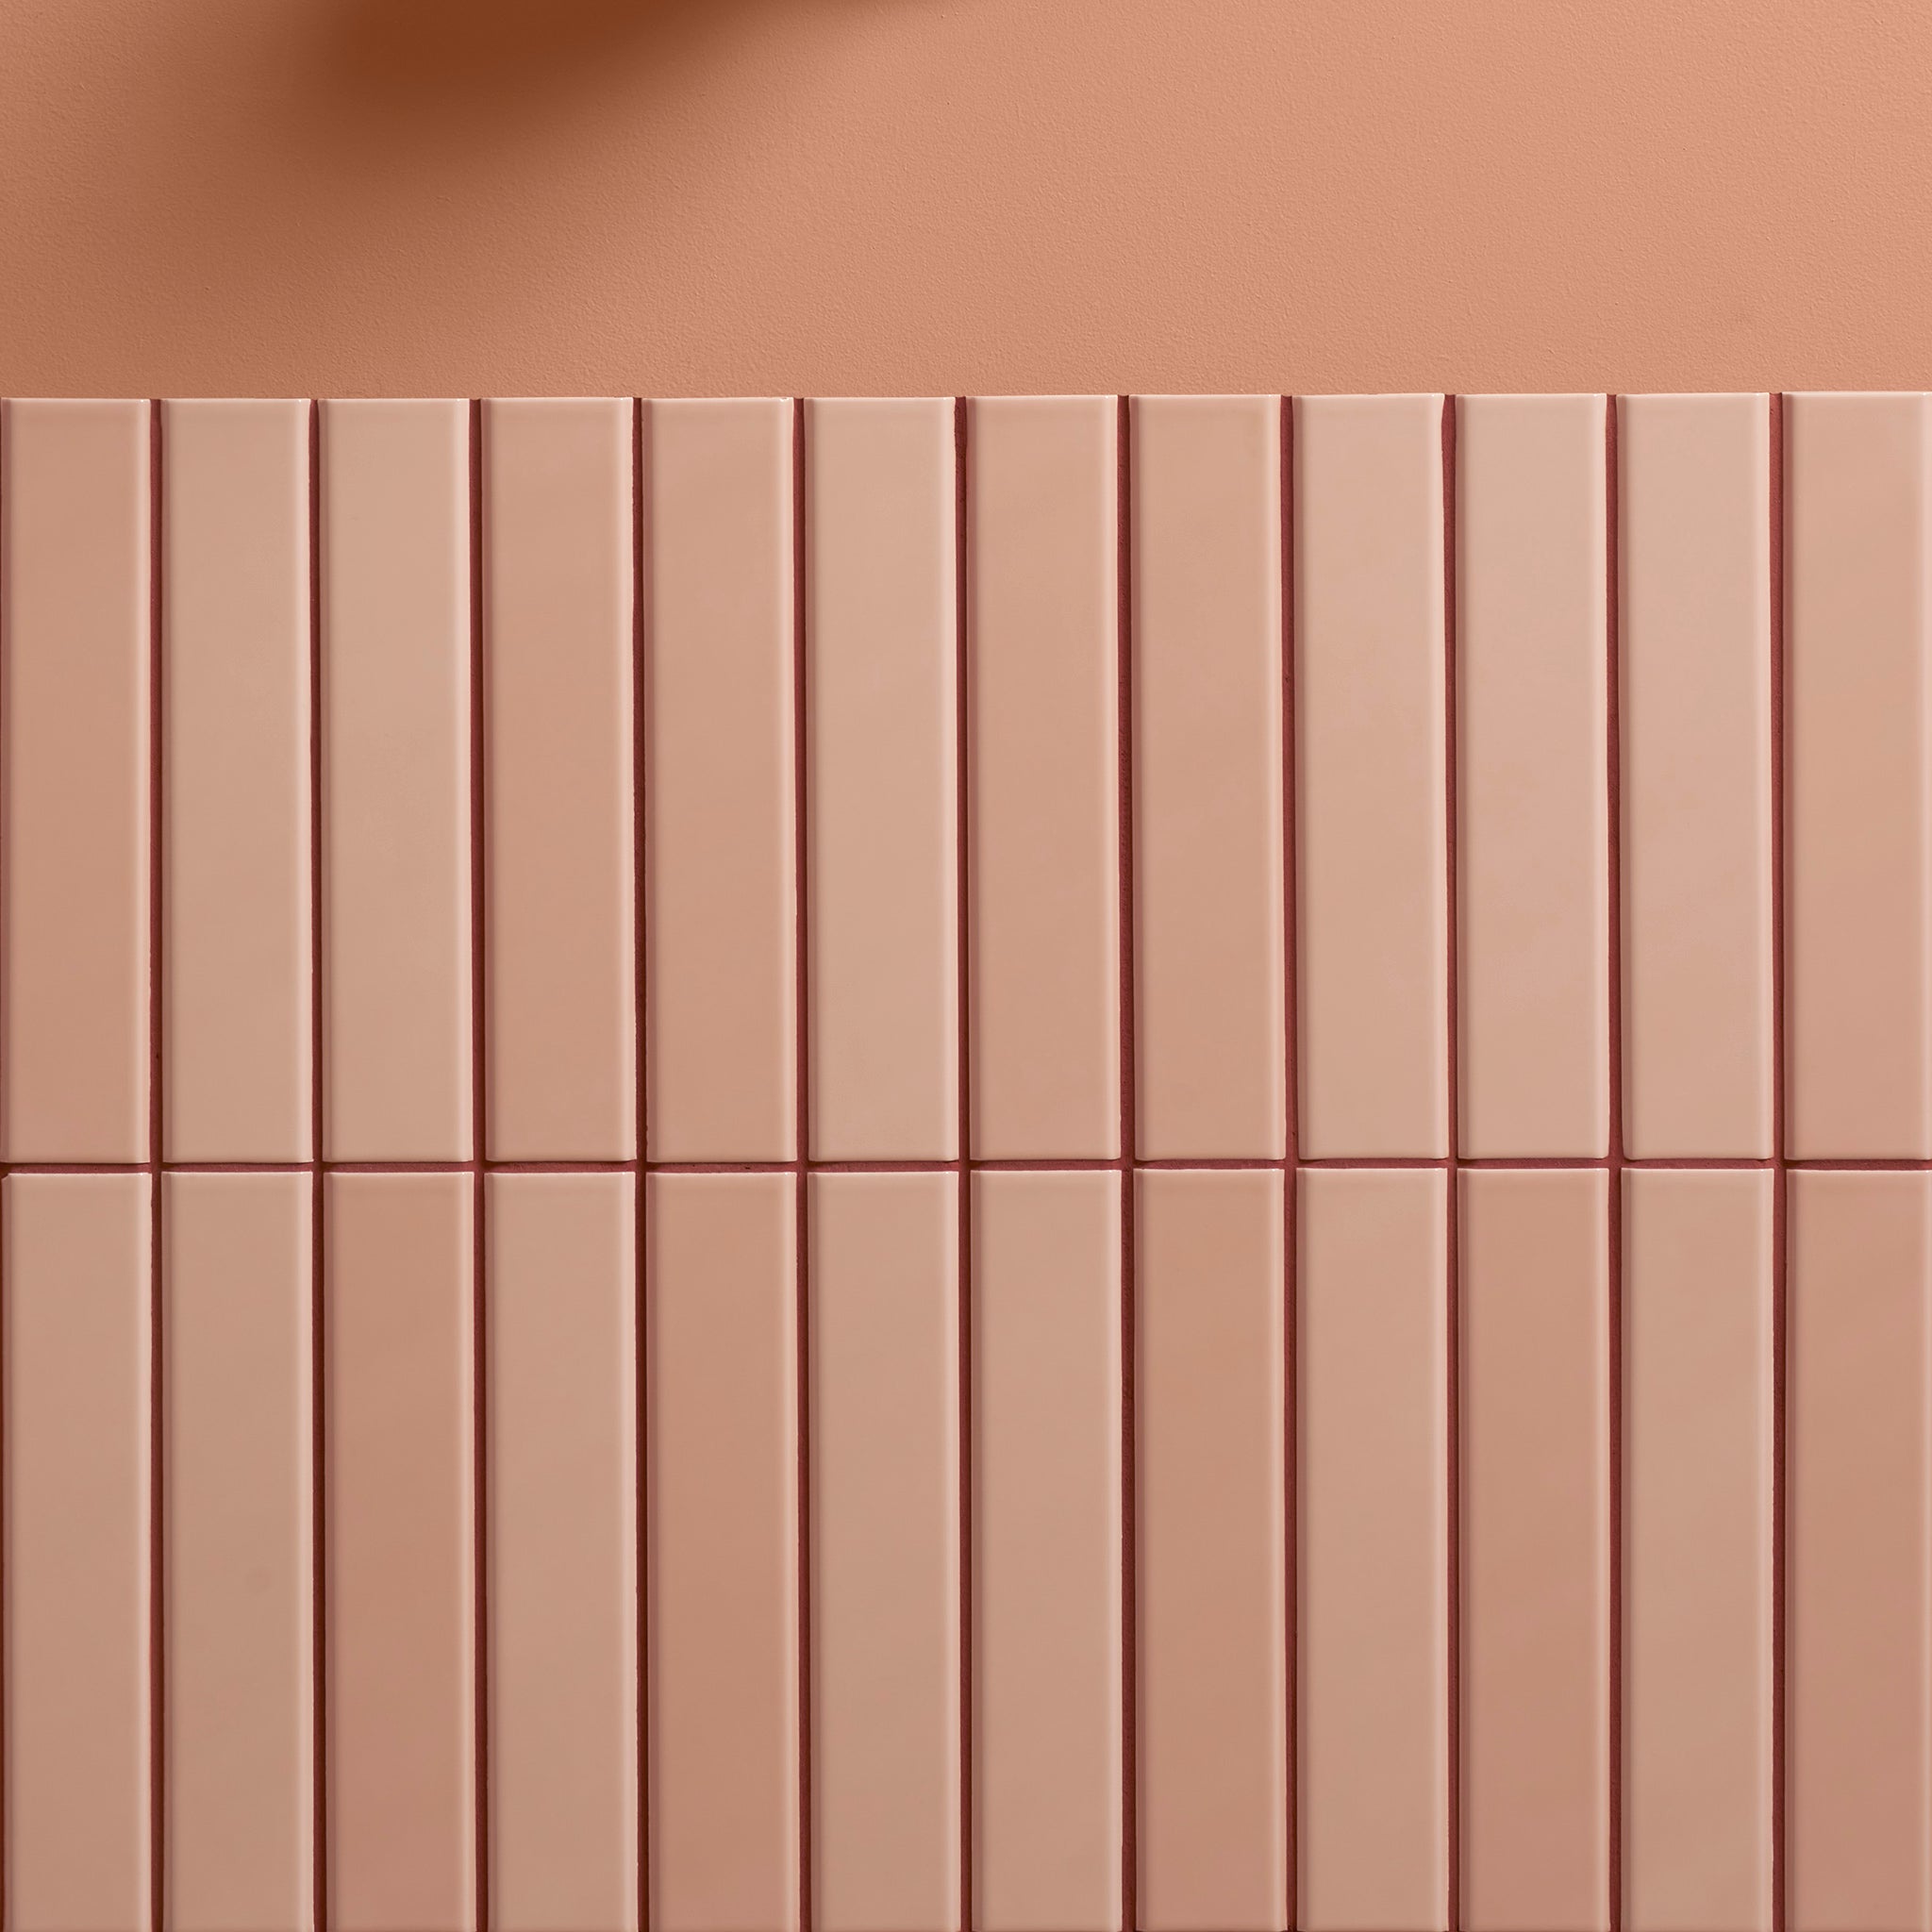 Combine Tile Vertical Peach